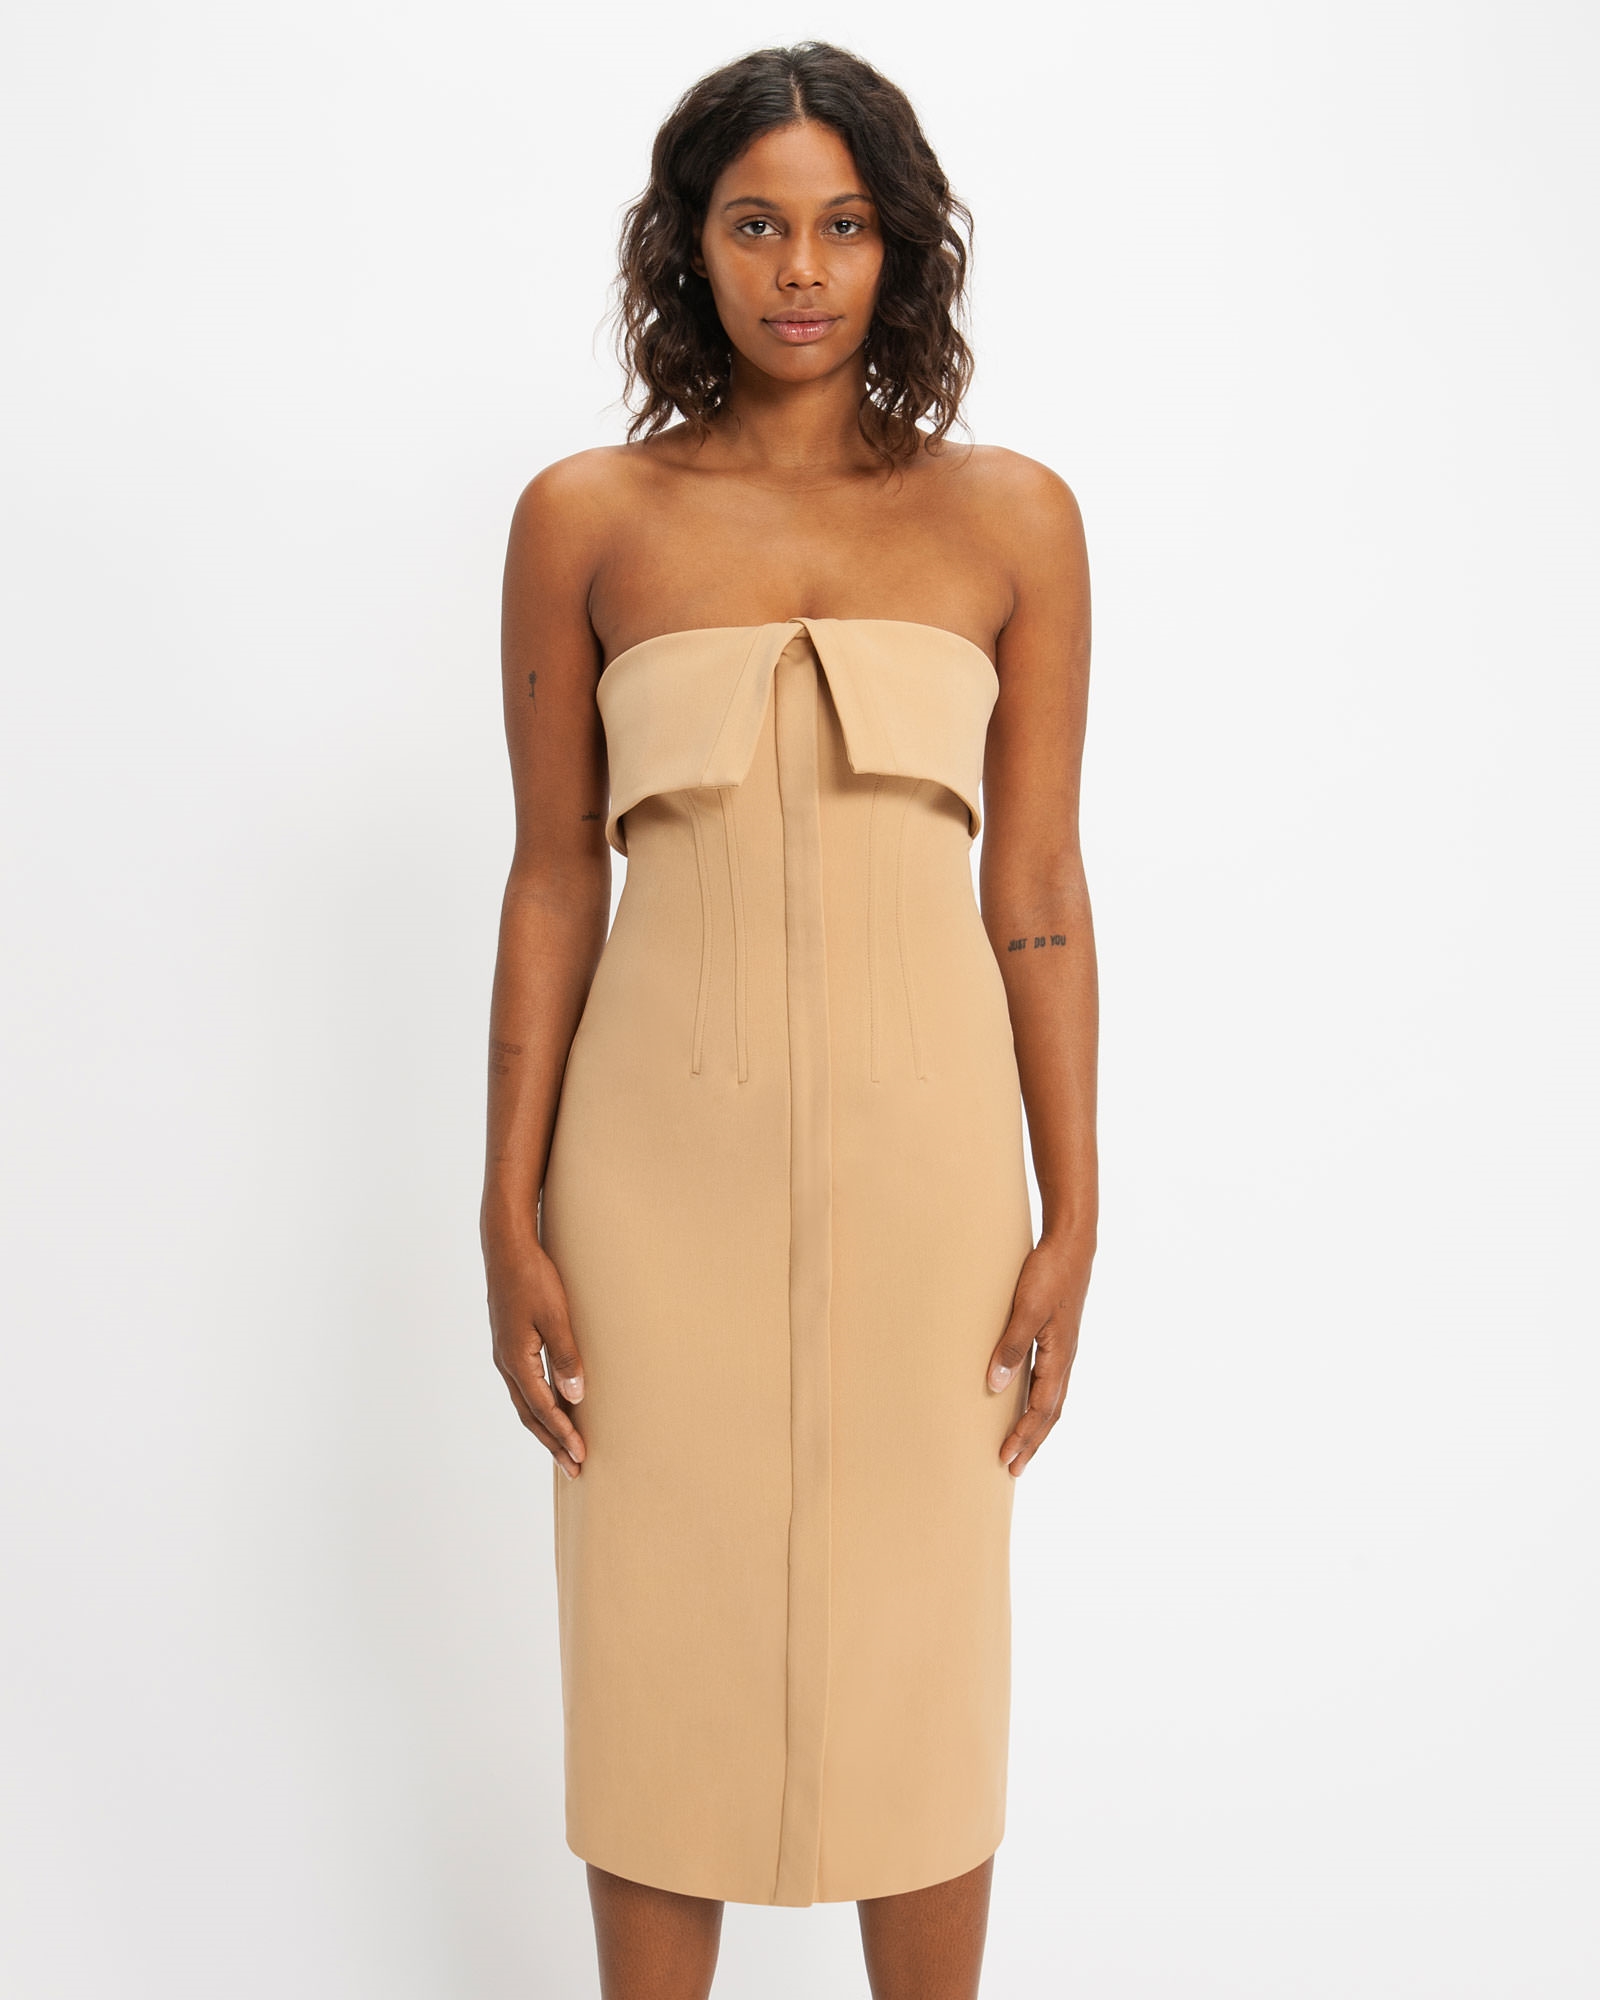 Topstitched Folded Column Dress | Buy Dresses Online - Cue